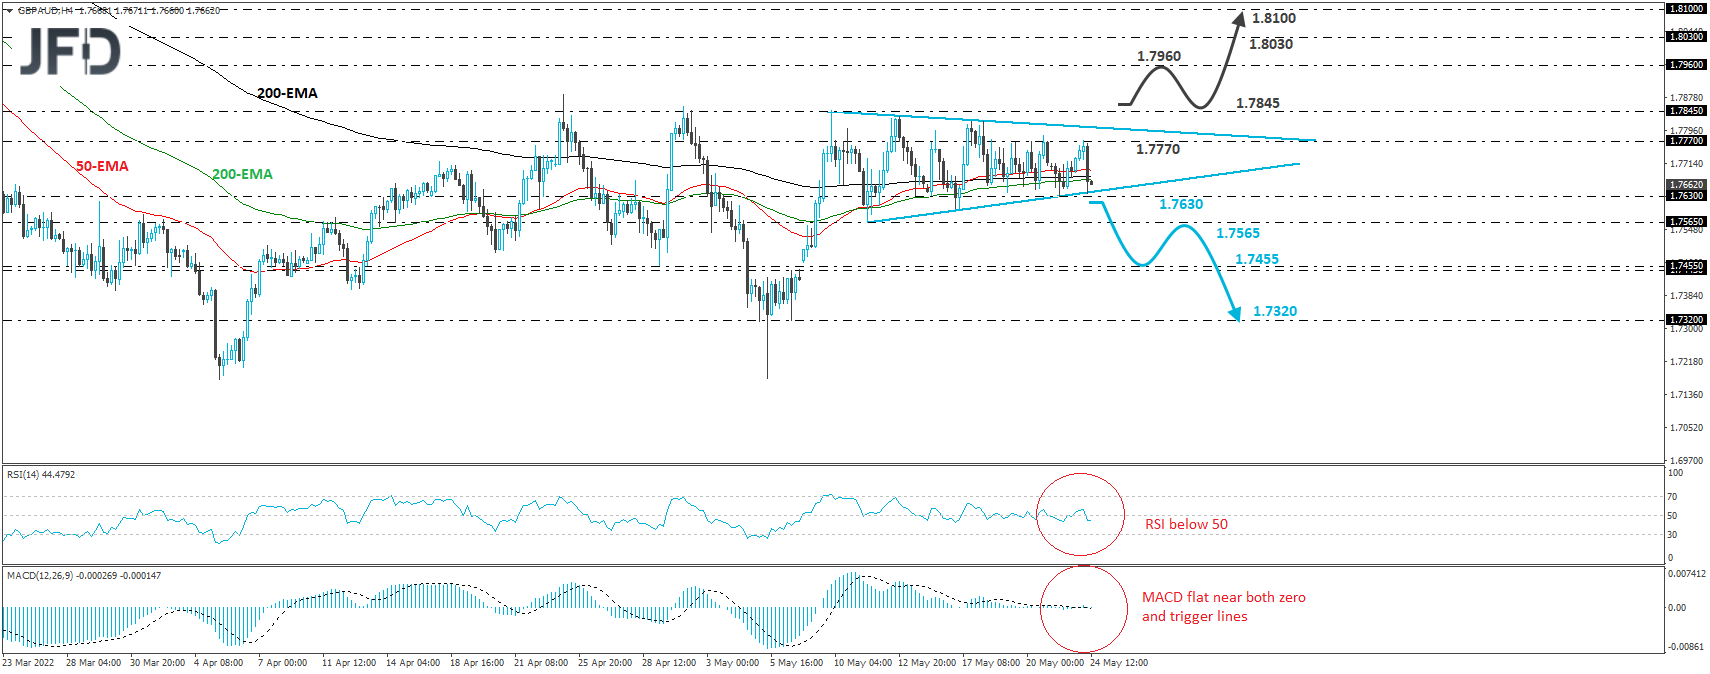 GBP/AUD 4-hour chart technical analysis